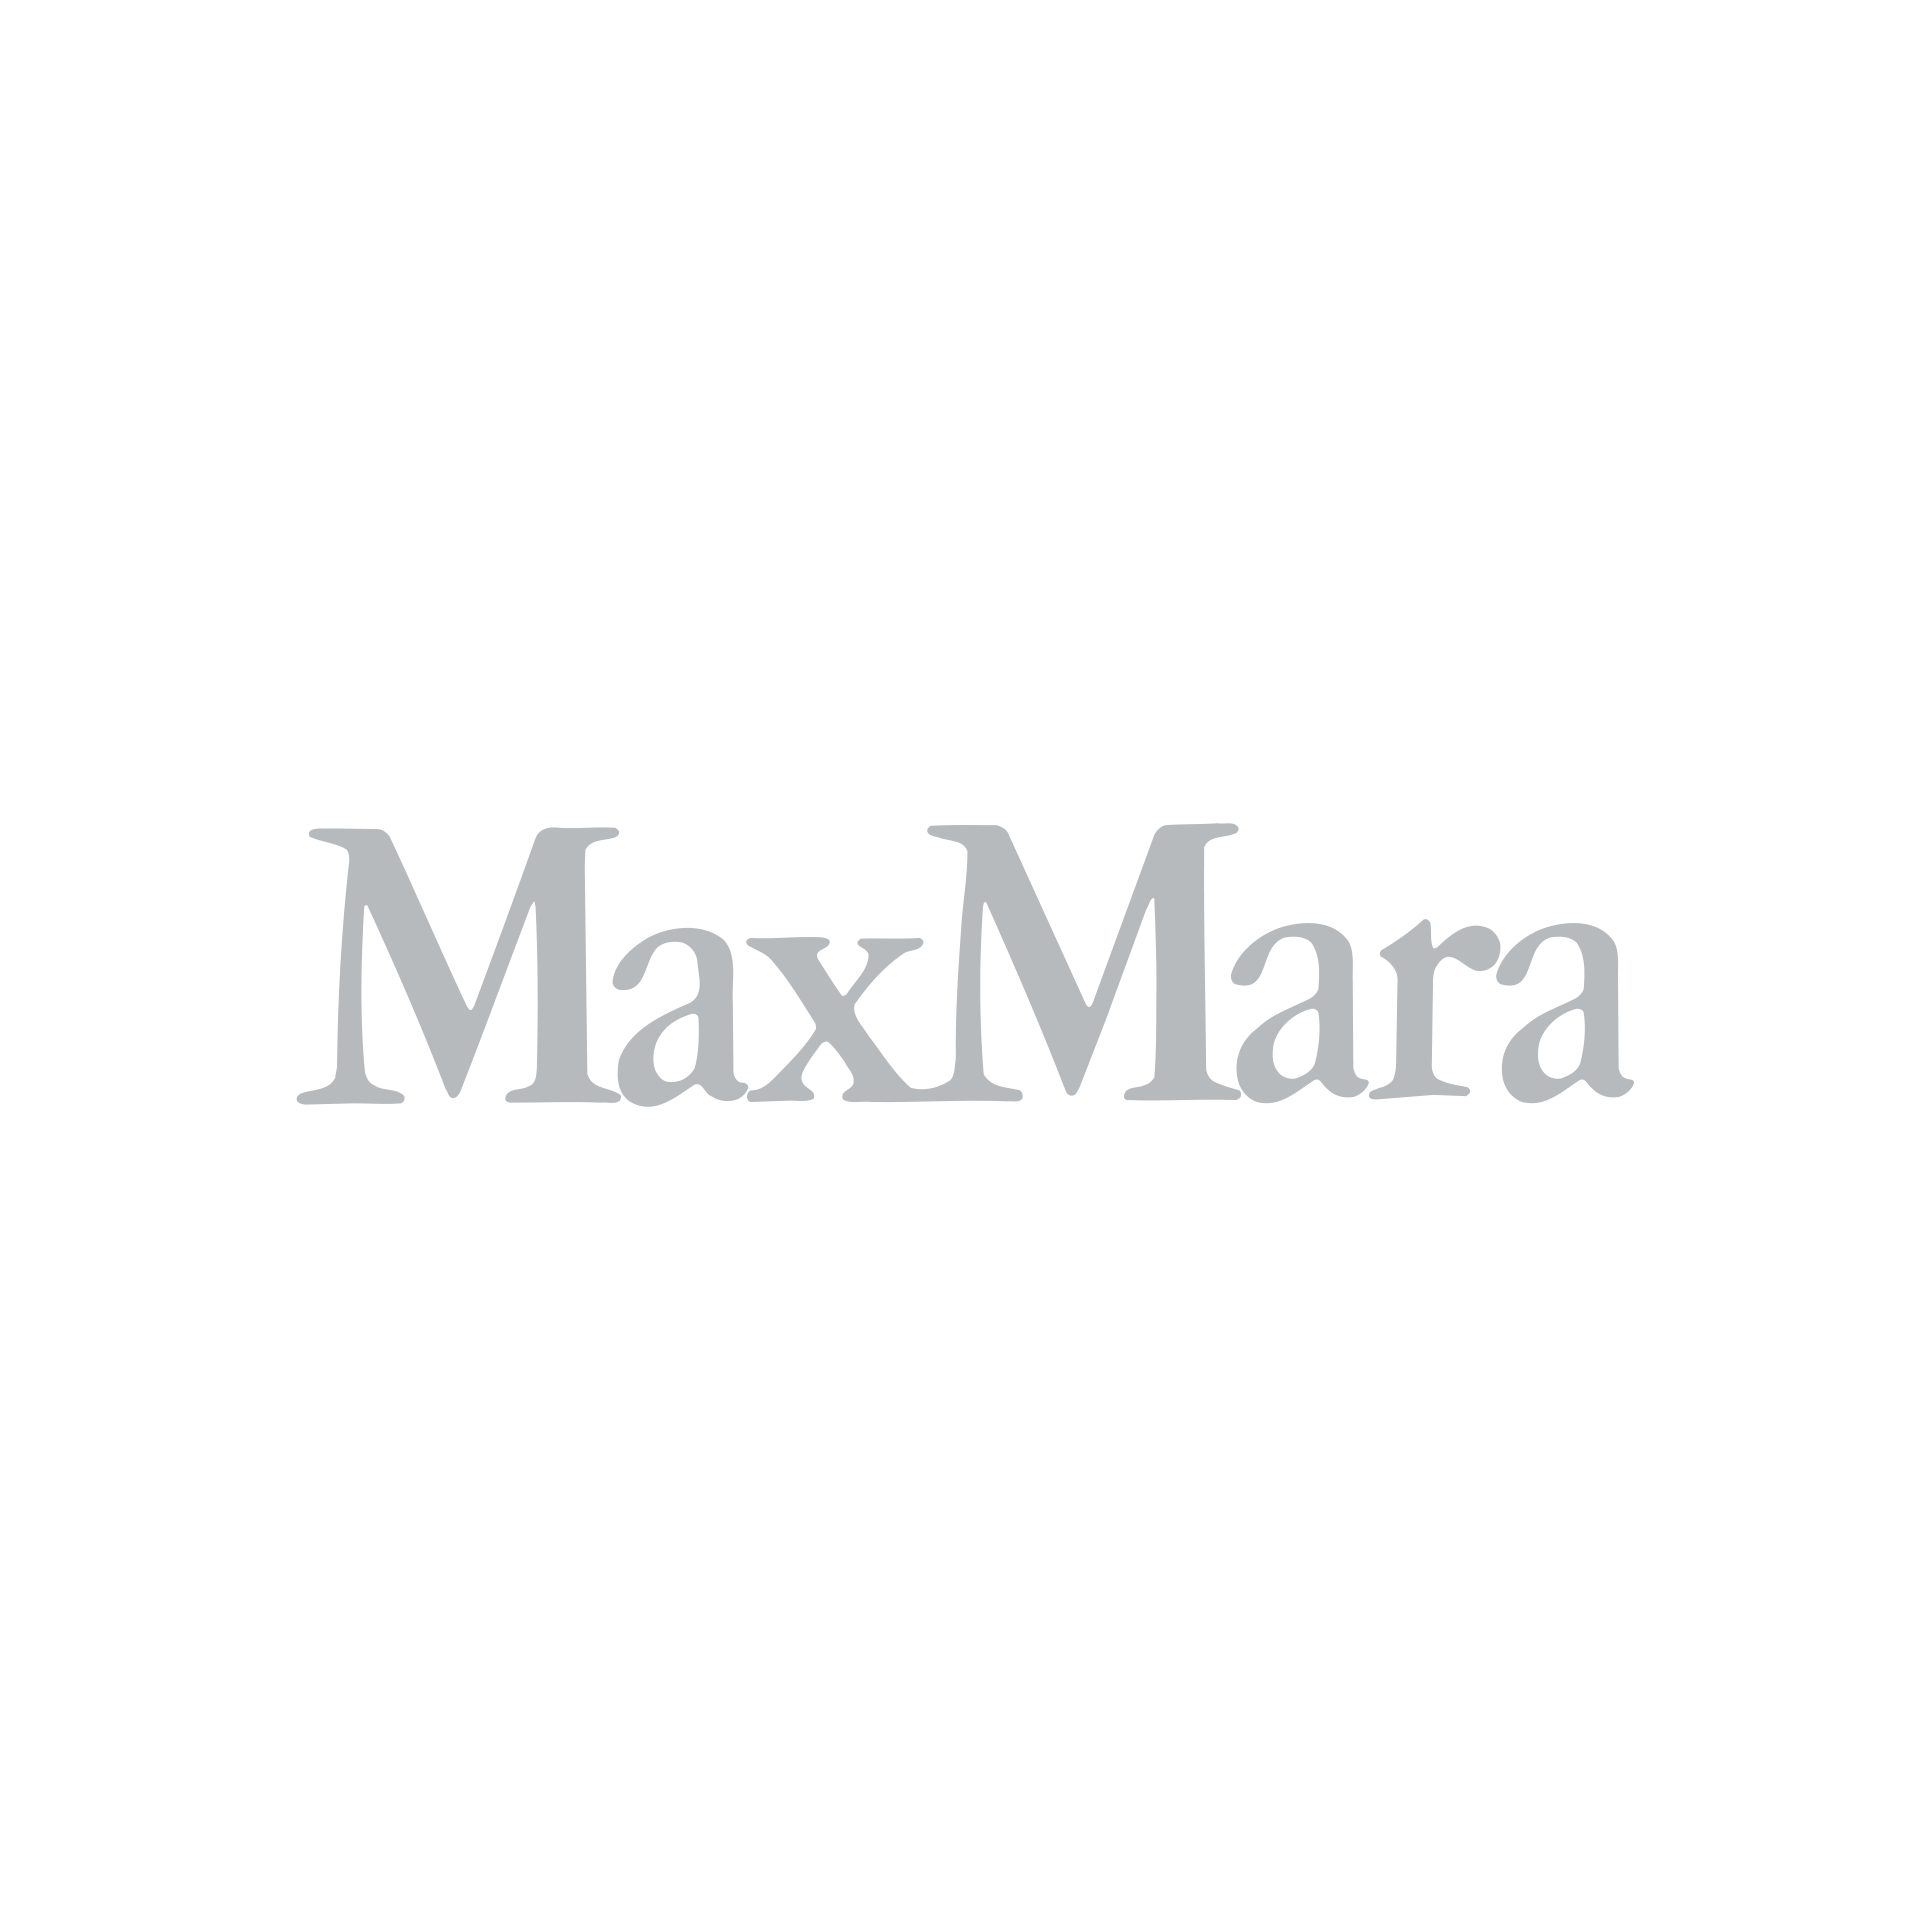 MAX-MARA.png